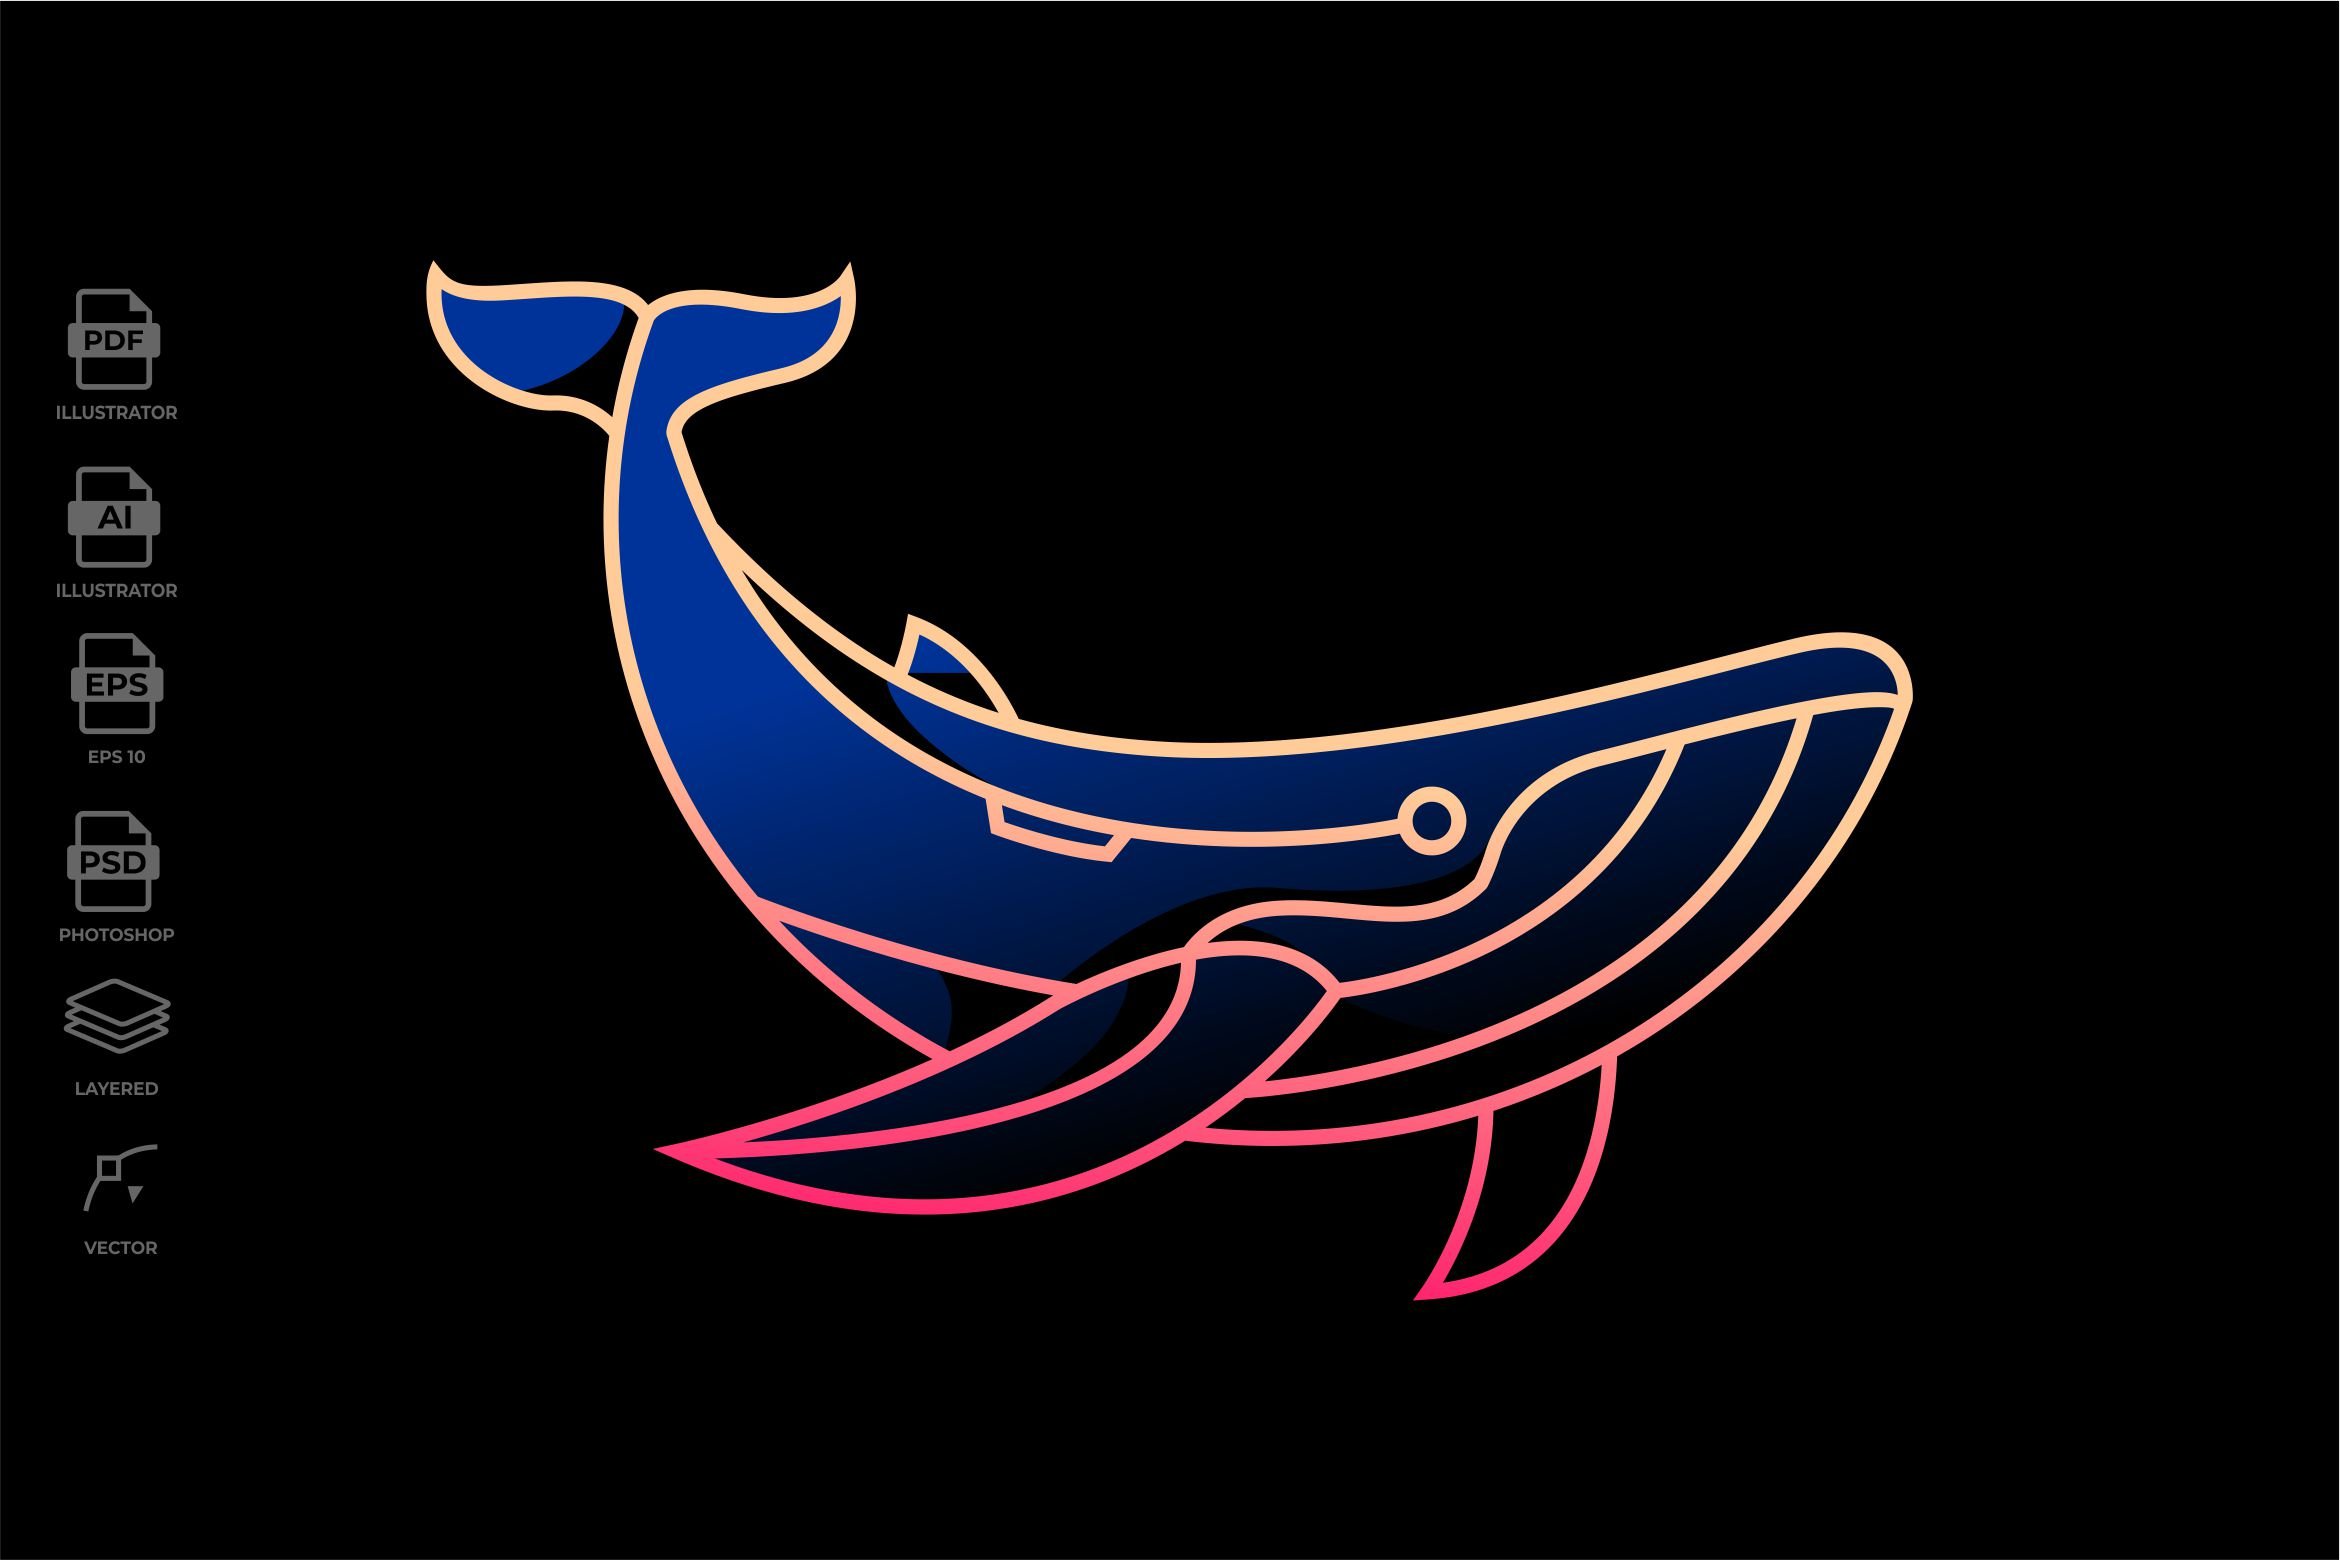 Lineart Geometric Blue Whale Tattoo cover image.